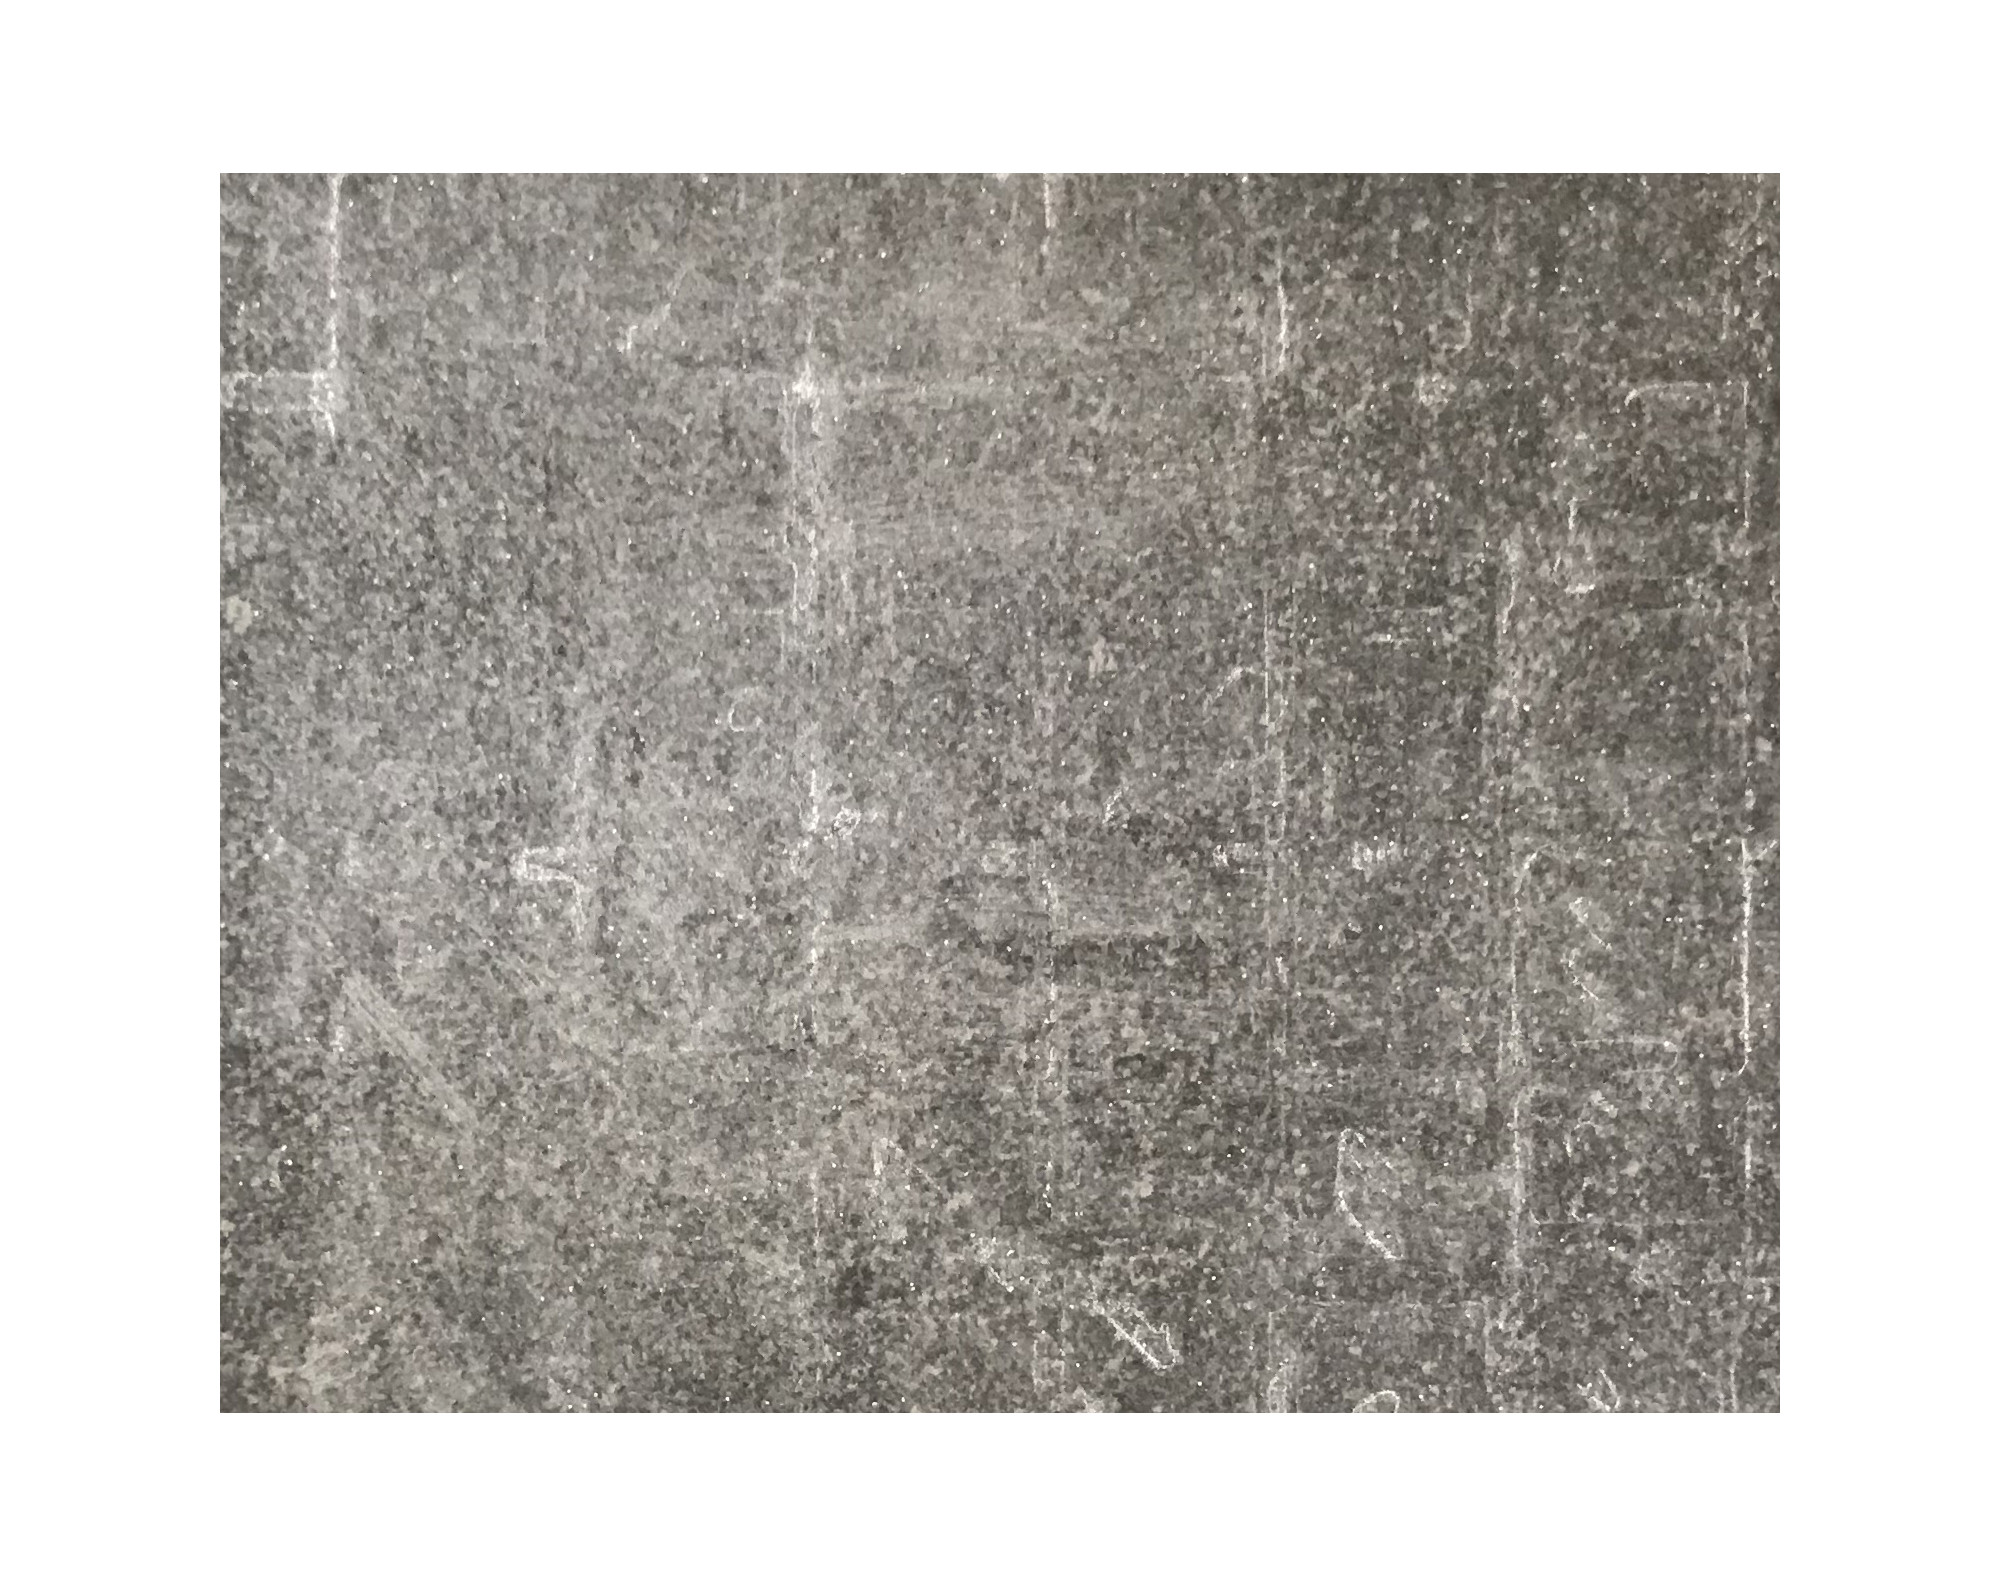 Harmo roc maranelloset, keramiek-serie, 8-vormig d:4,60mx7,25m, zand zwart, keramisch porselein